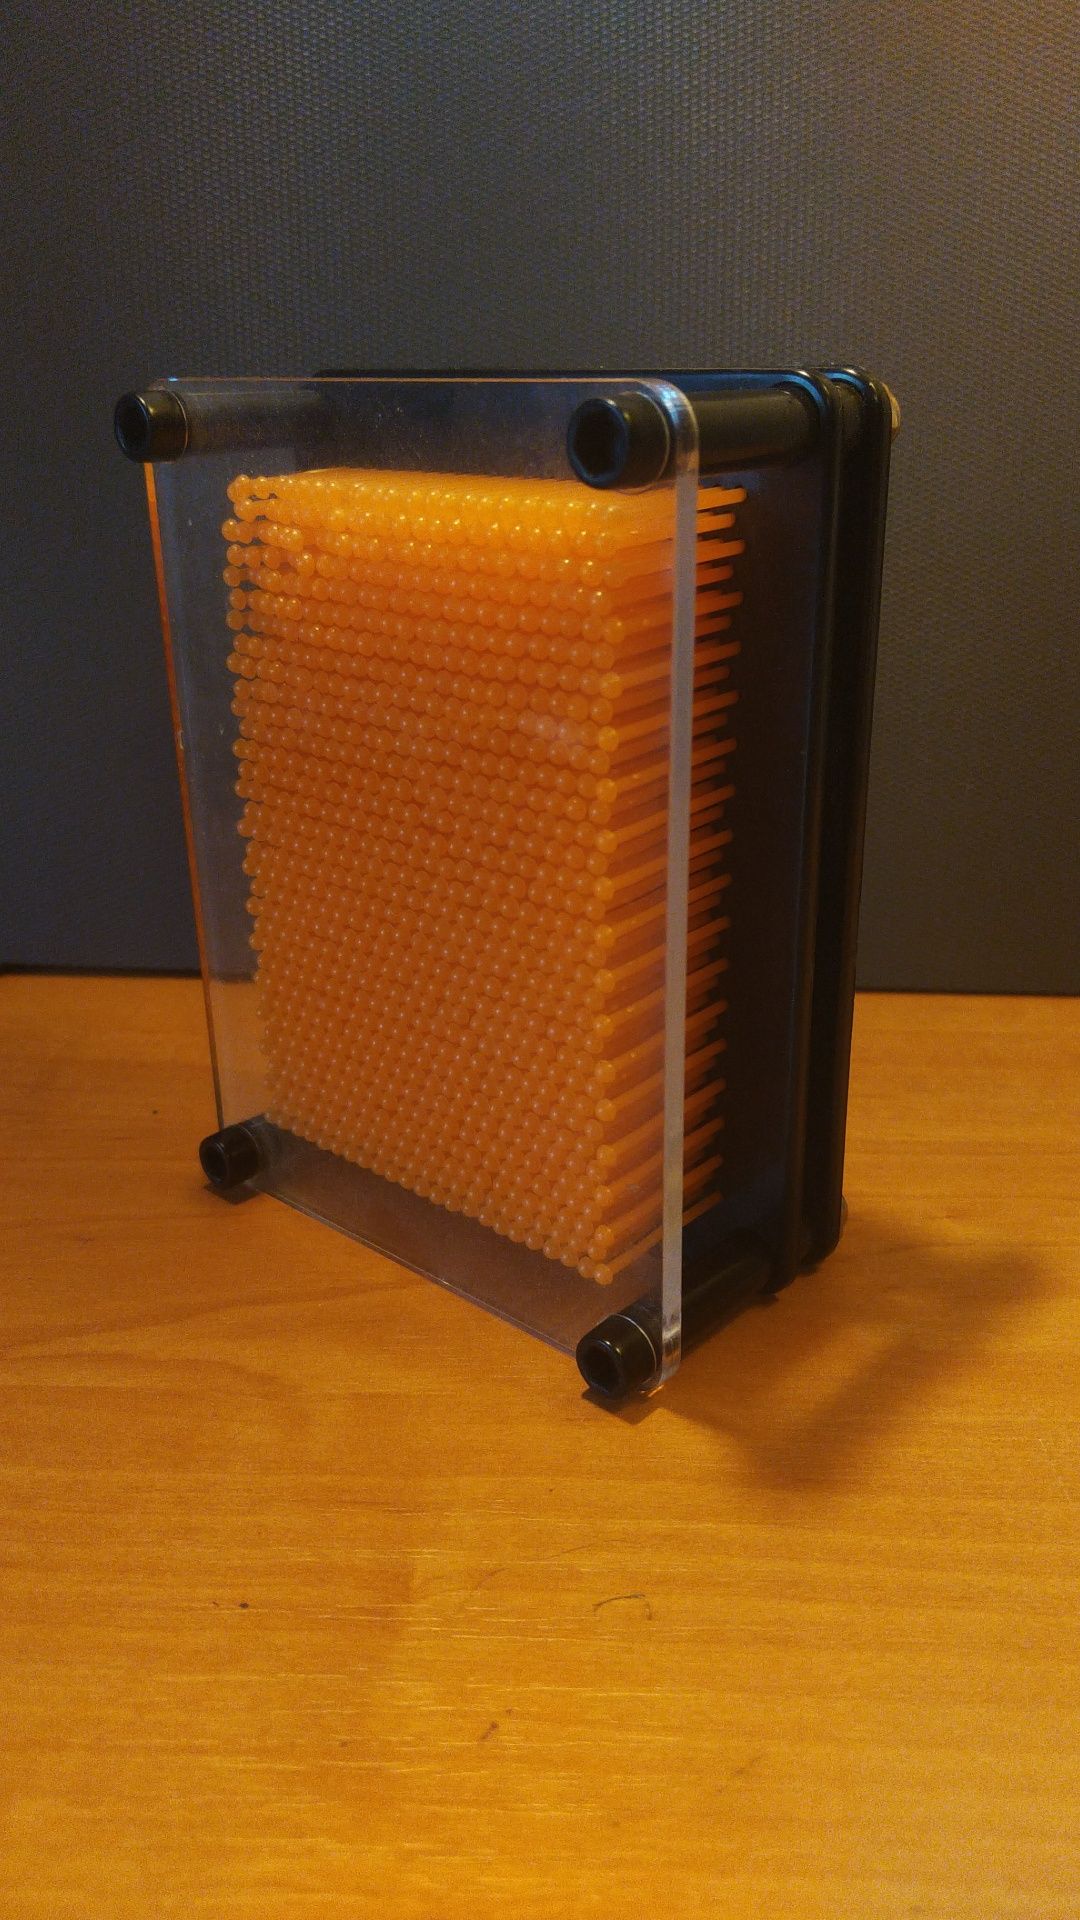 Tablica szpilkowa 3D - pomarańczowa